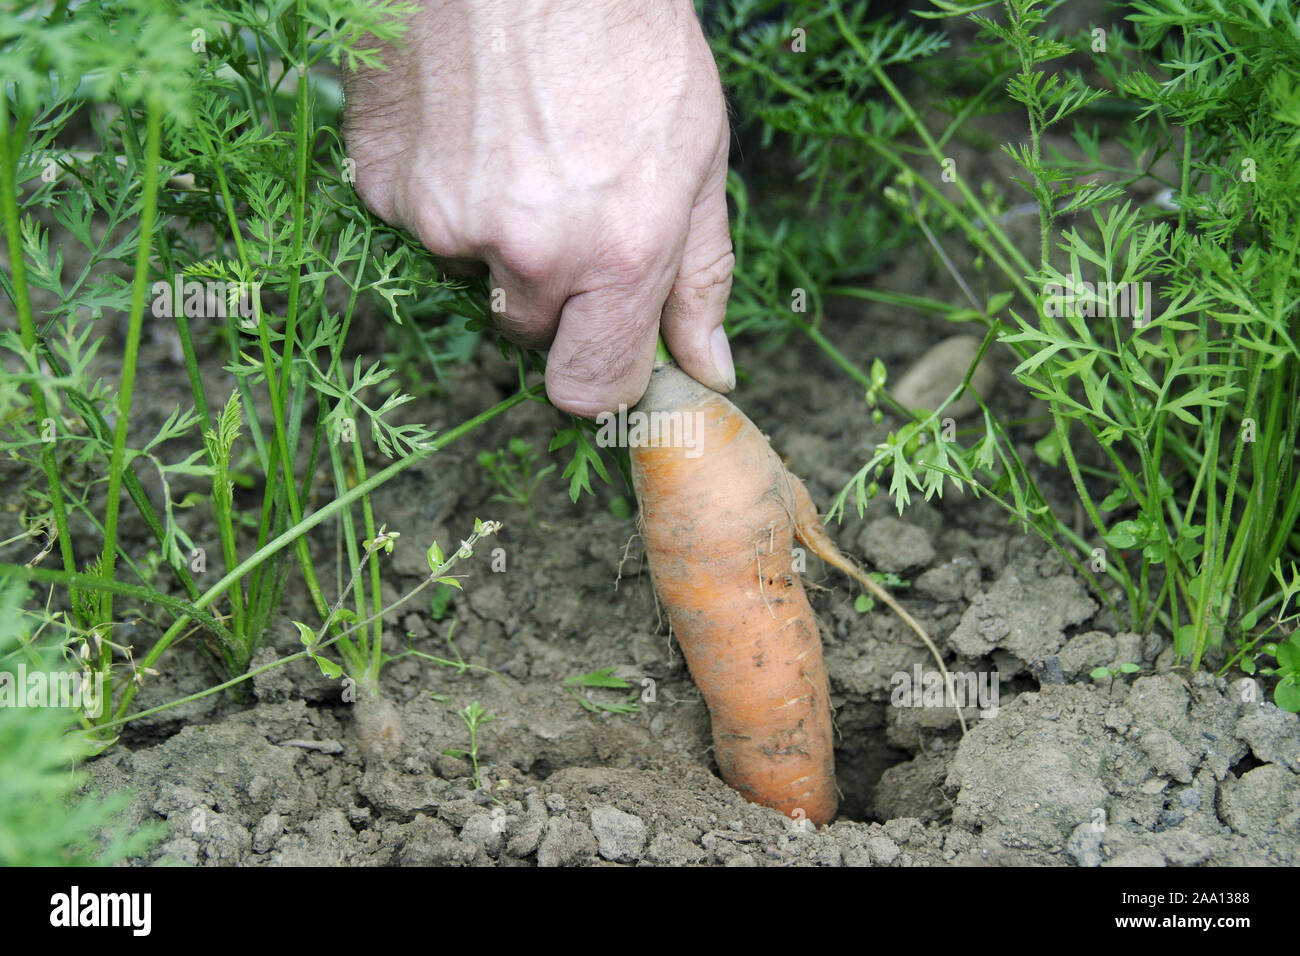 Karottenernte, eine Hand zieht eine Karotte aus der Erde / Harvest of a carrot, a hand is pulling a carrot out of the earth Stock Photo